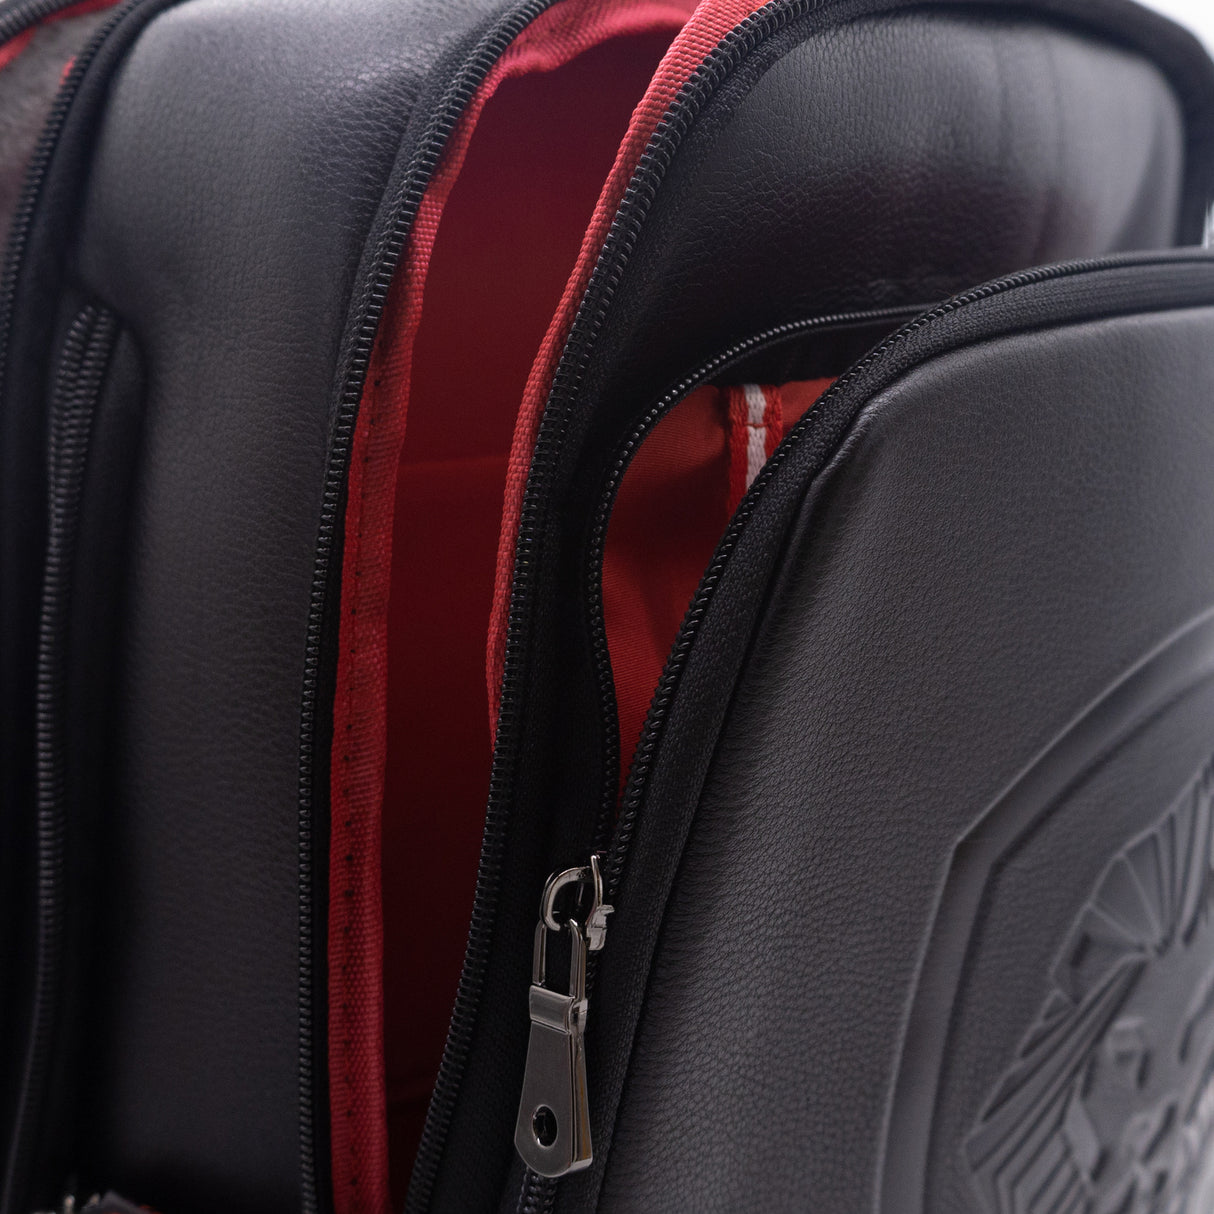 Premium Valuetainment Leather Backpack